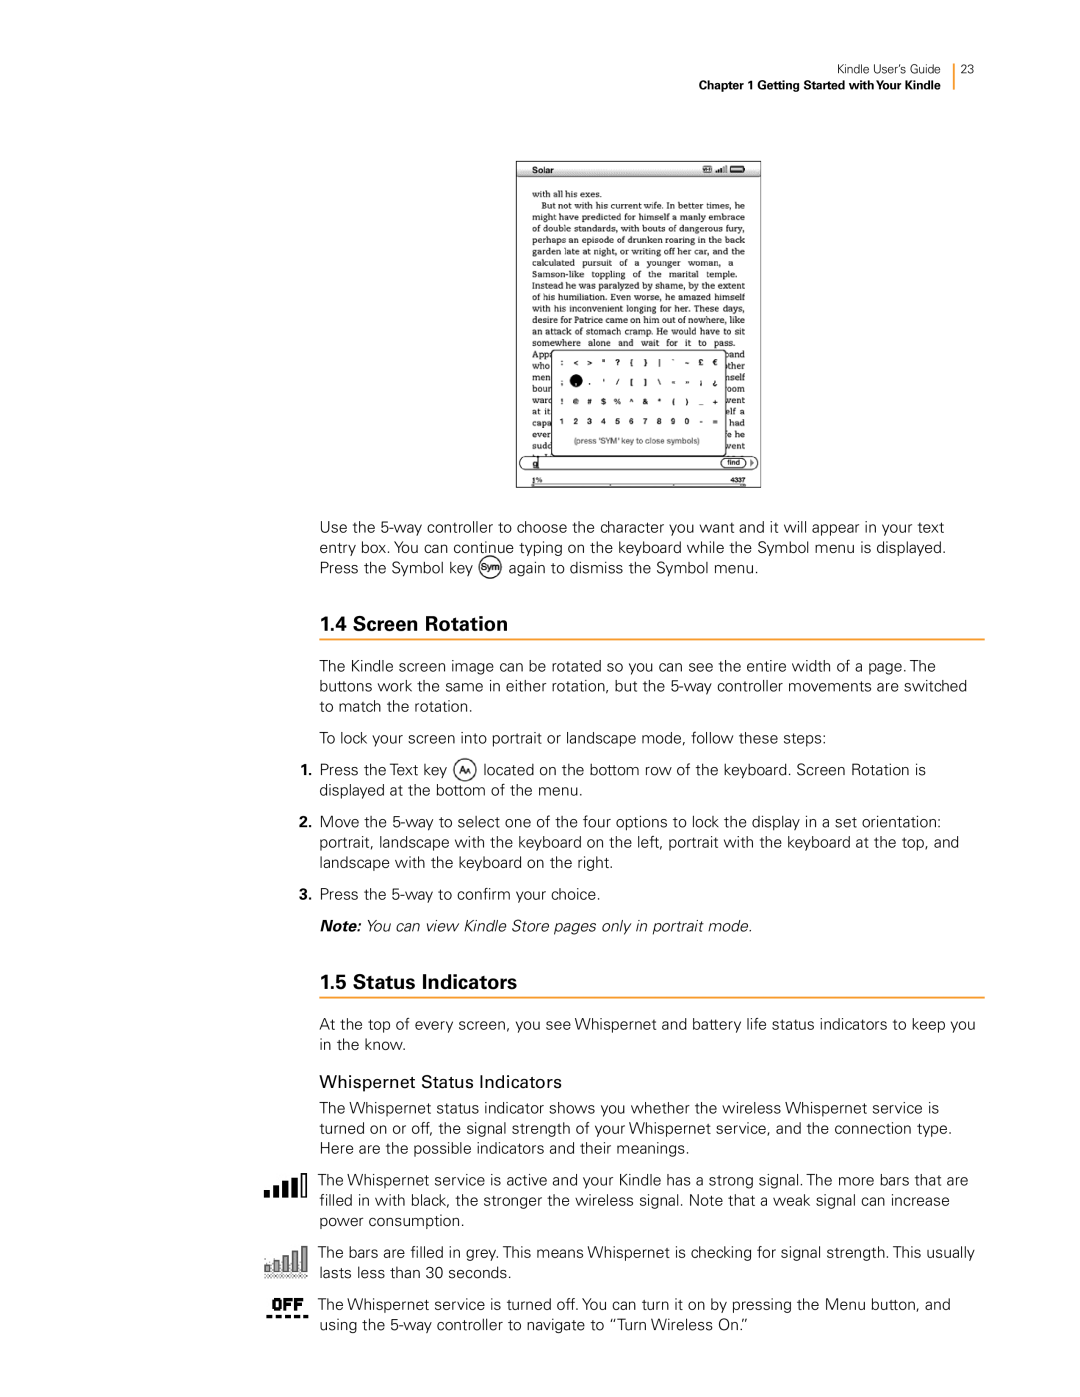 Amazon KNDKYBRD3G manual Screen Rotation, Whispernet Status Indicators 